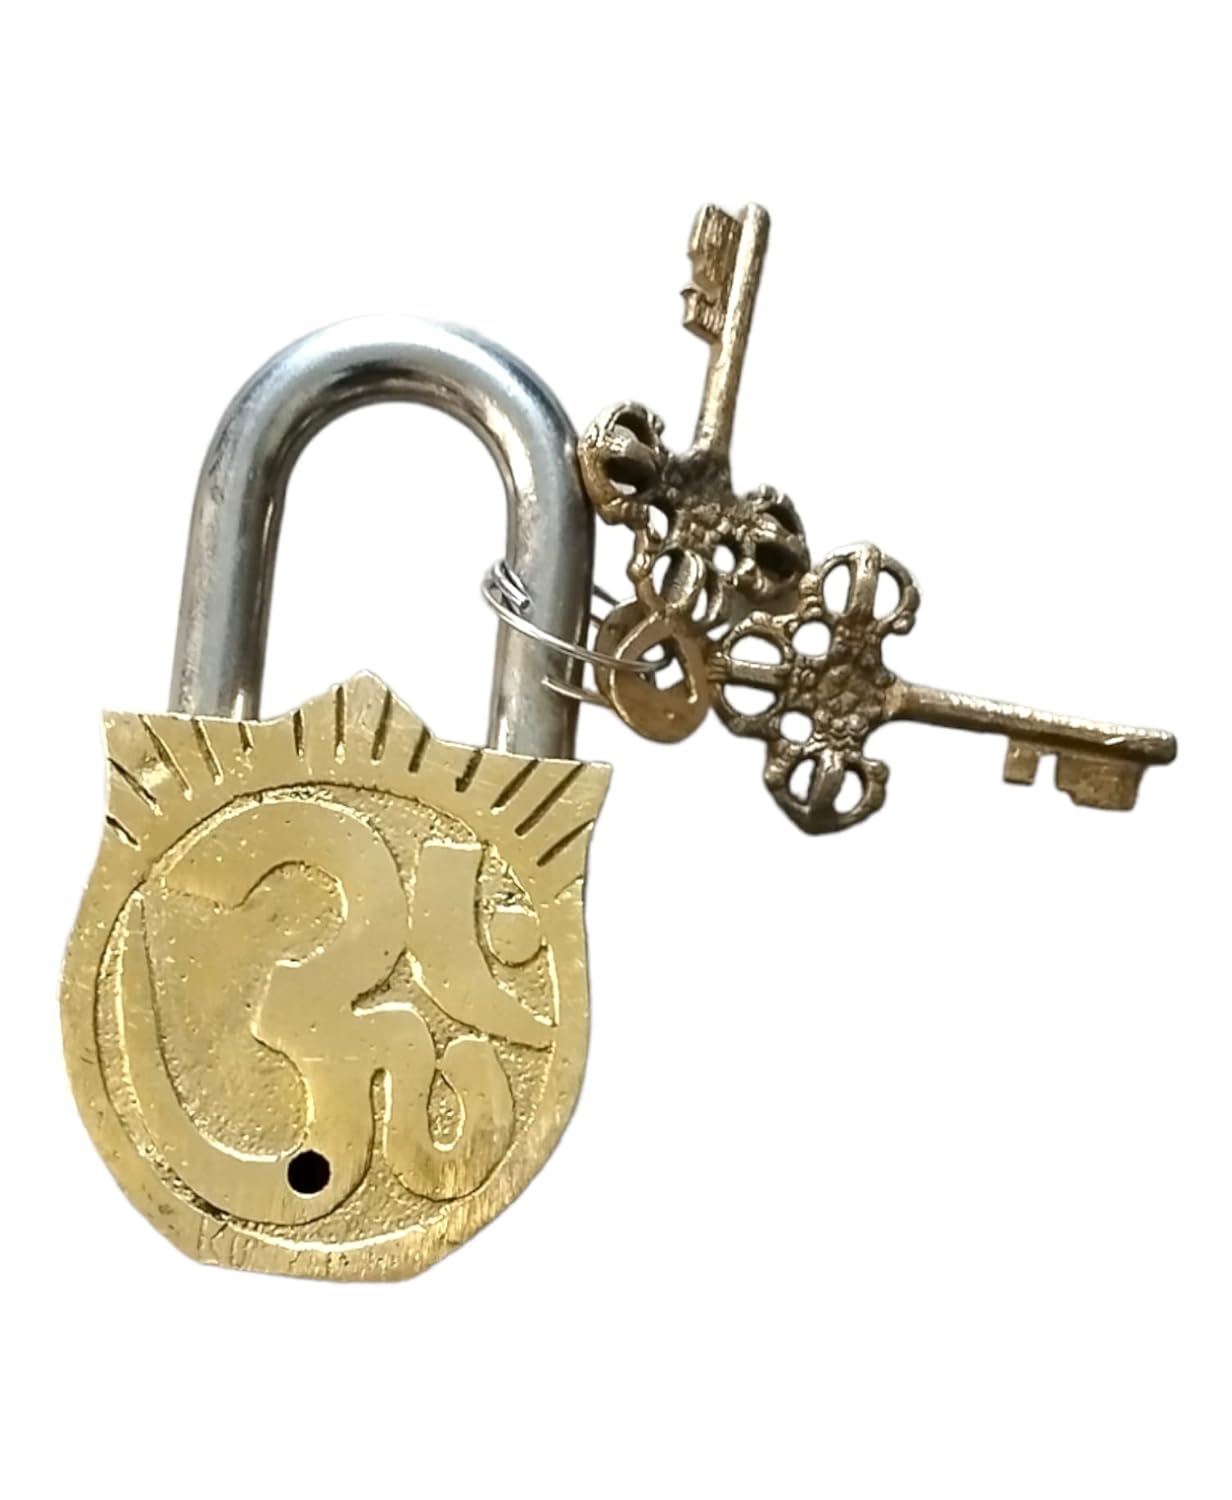 Decorative Handcrafted Lord Ganesha Design Brass Padlock with 2 Keys